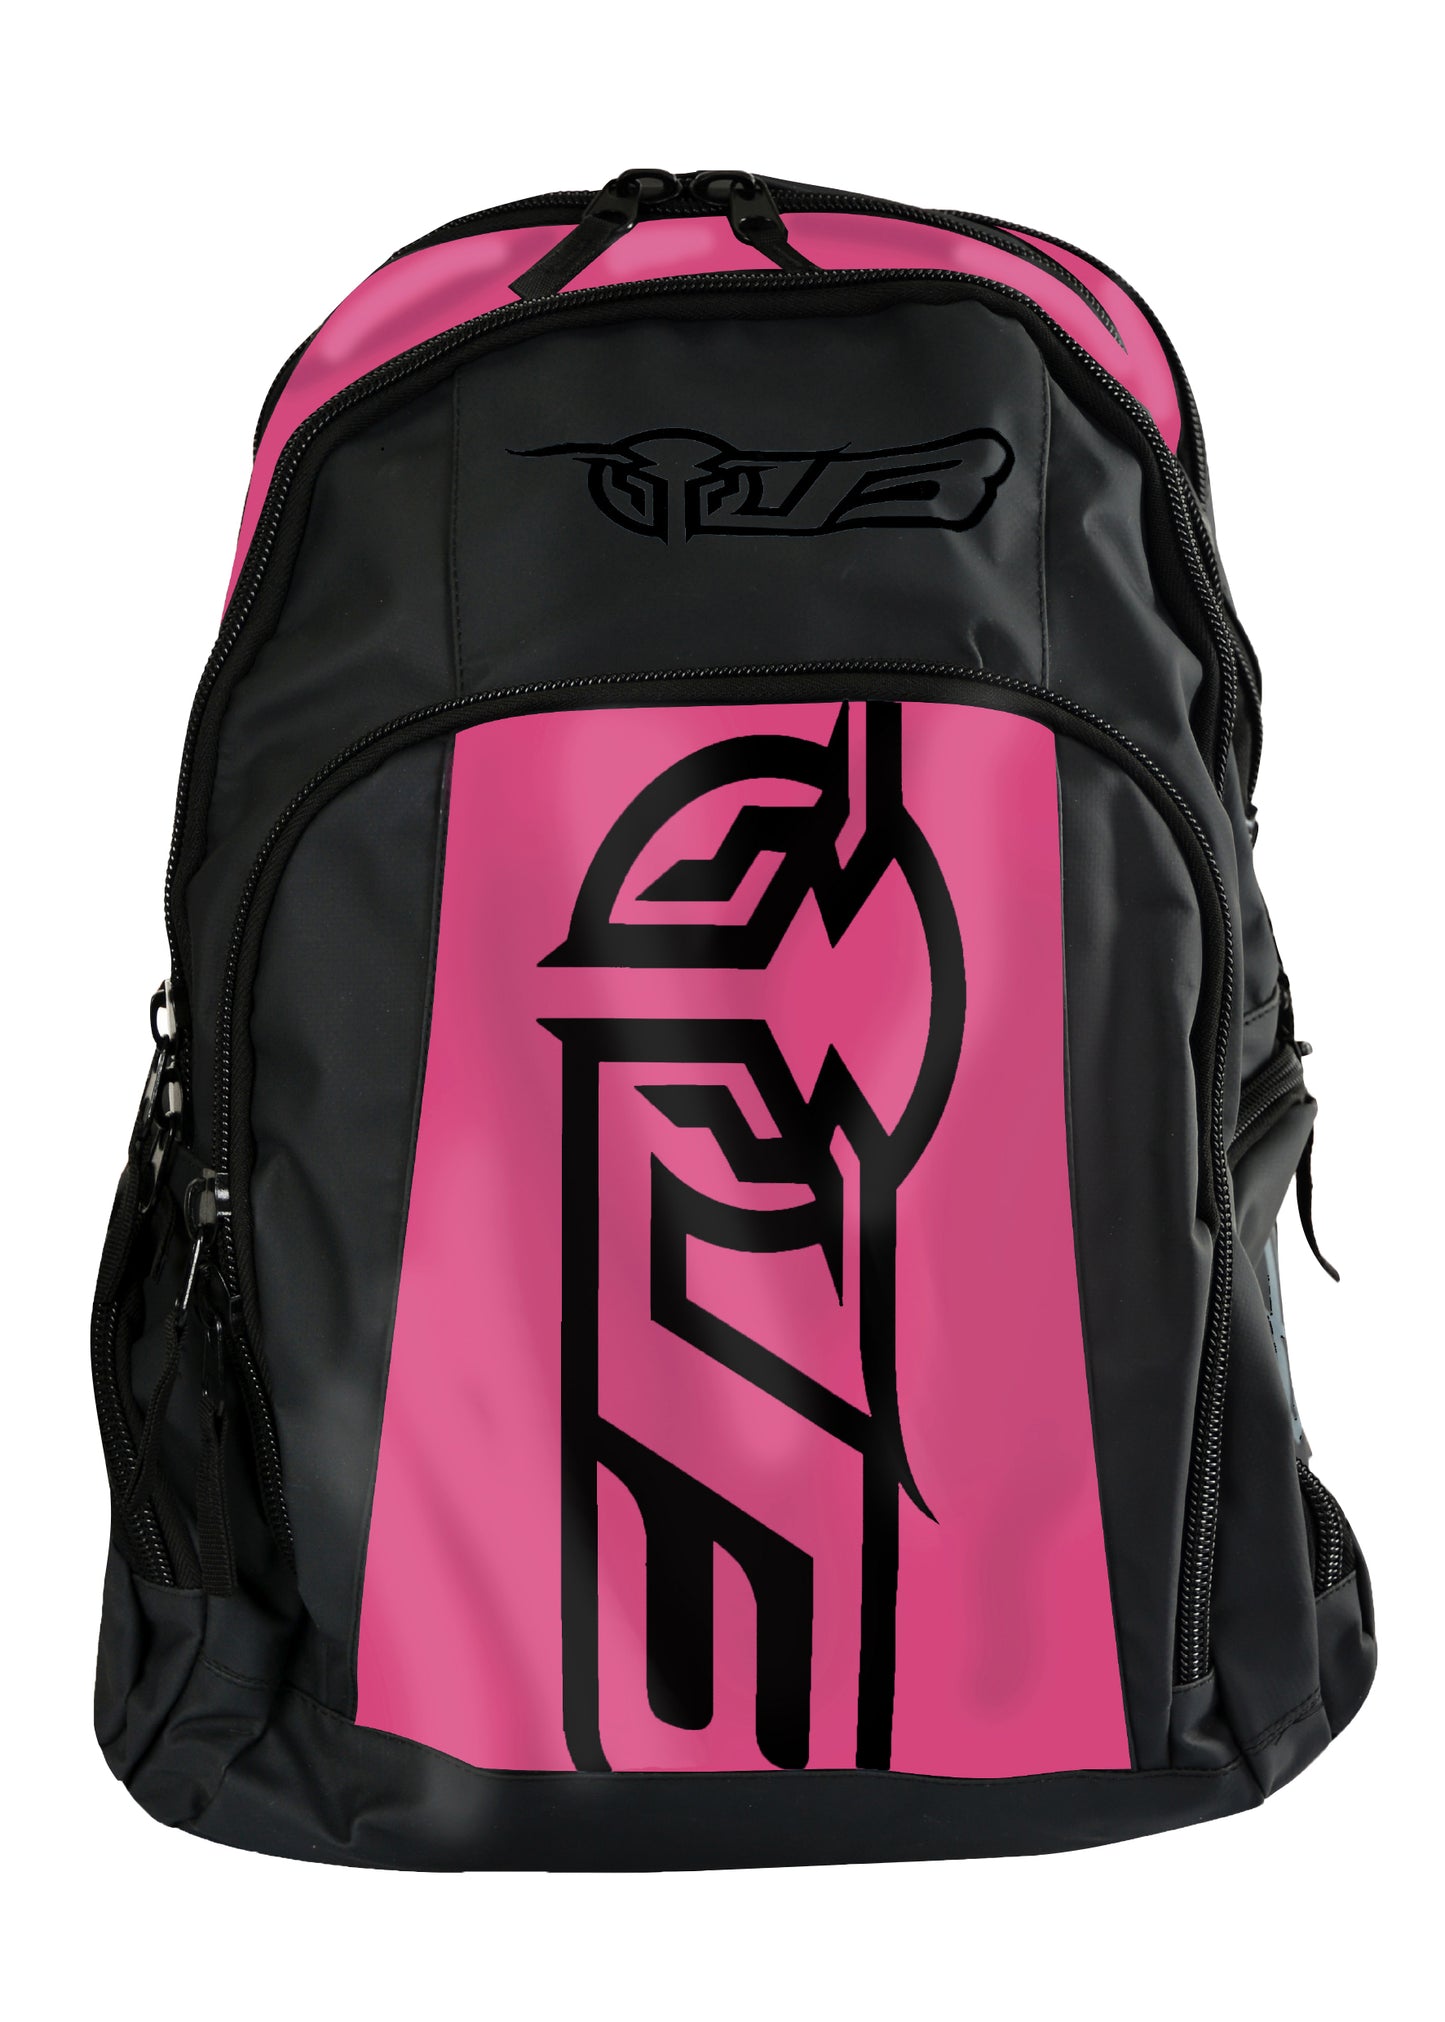 Bullzye Dozer Backpack - Pink/Black